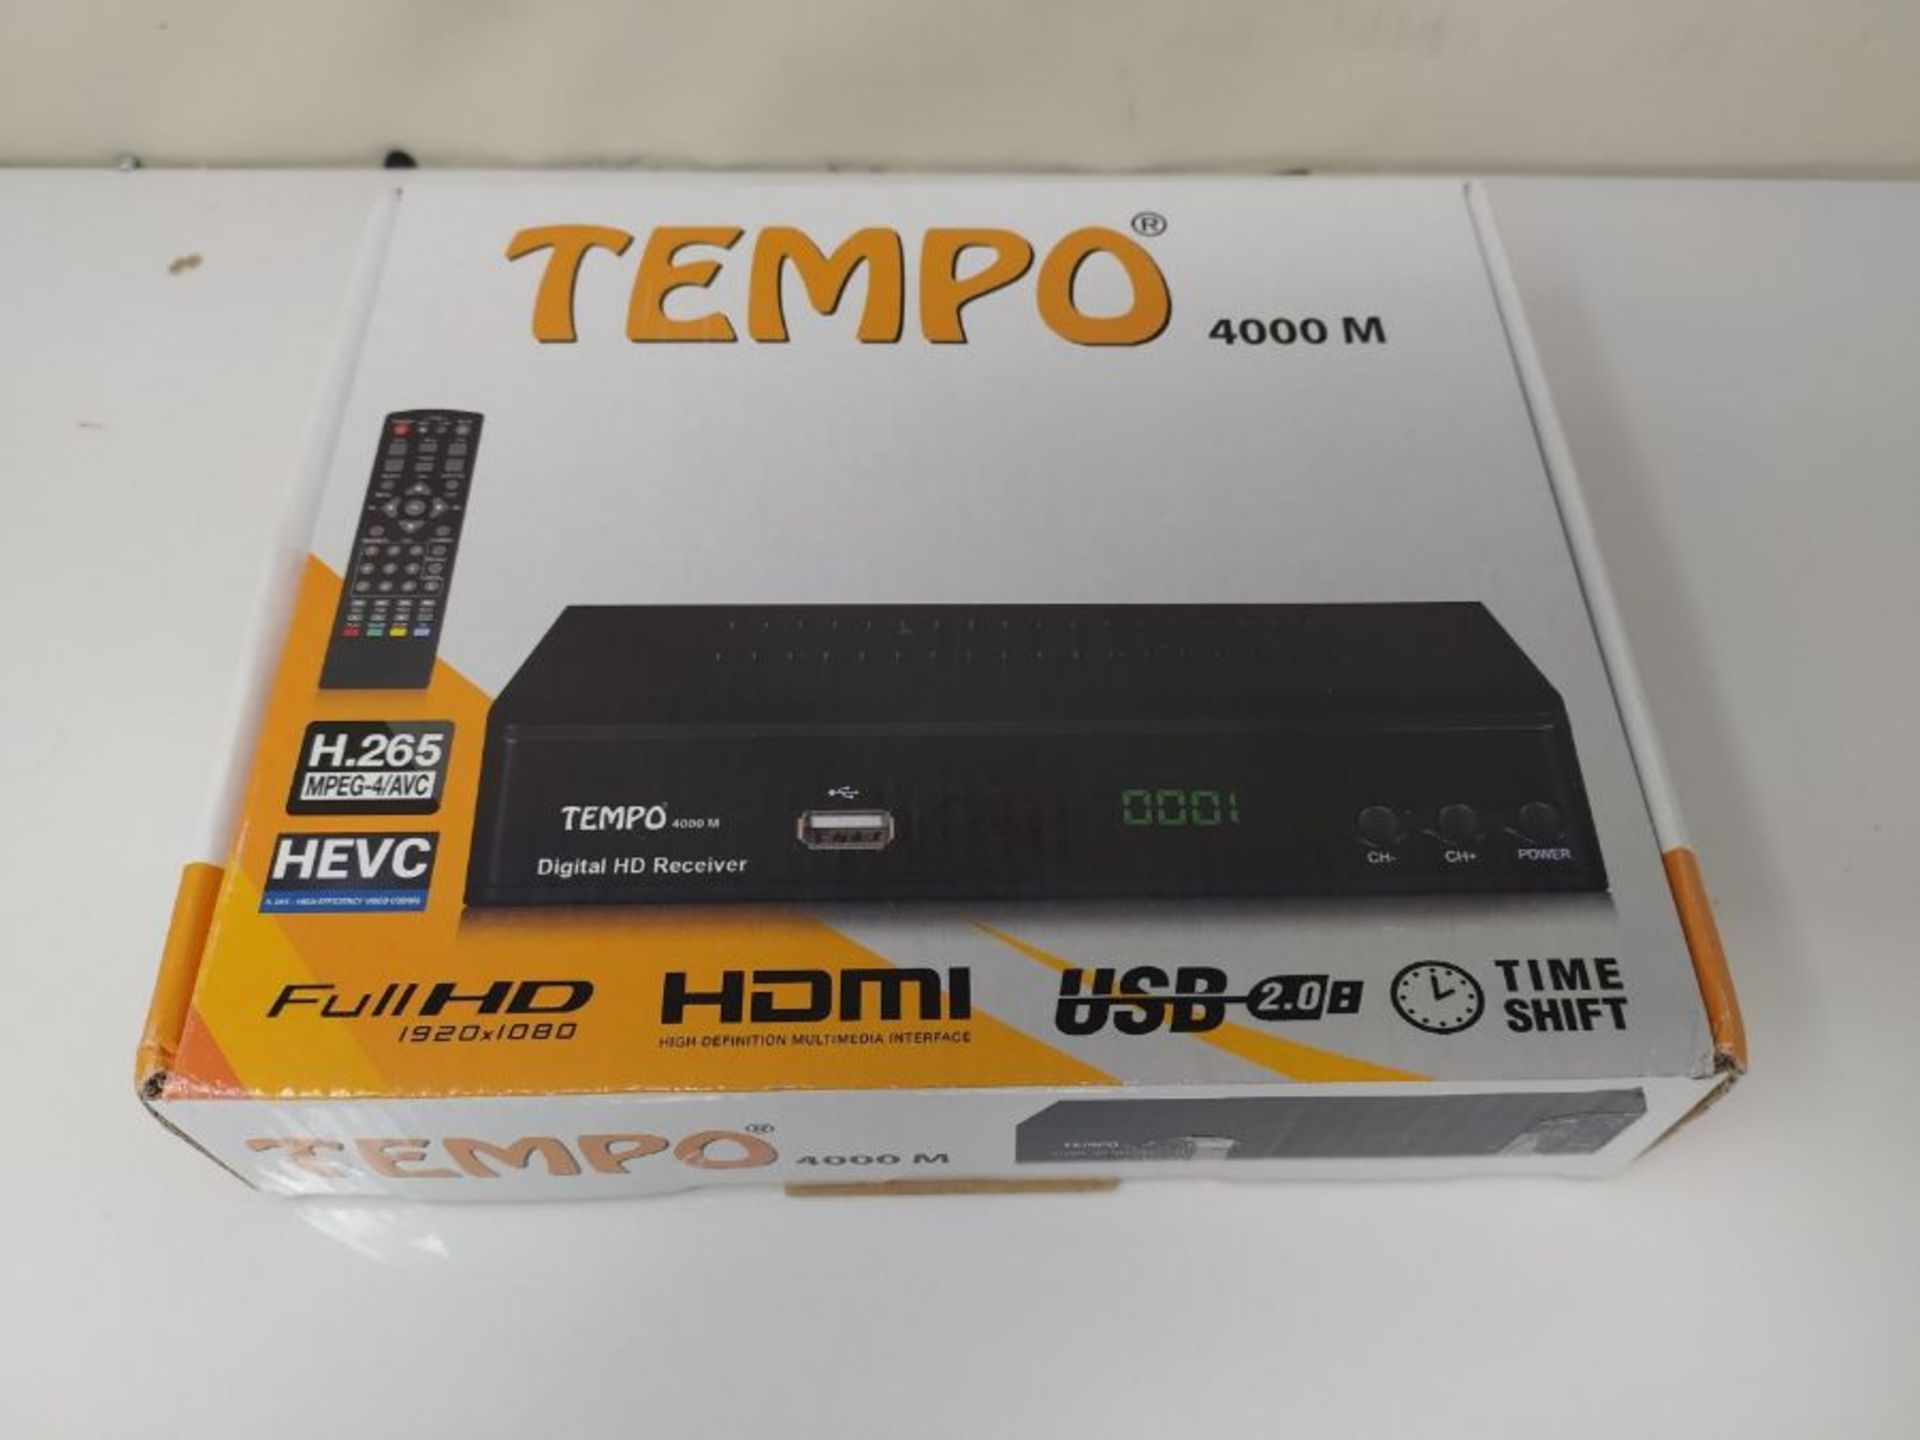 Tempo tmp4000 - Decoder Digitale Terrestre DVB T2 / HD / HDMI / Ricevitore TV / PVR / - Image 5 of 6